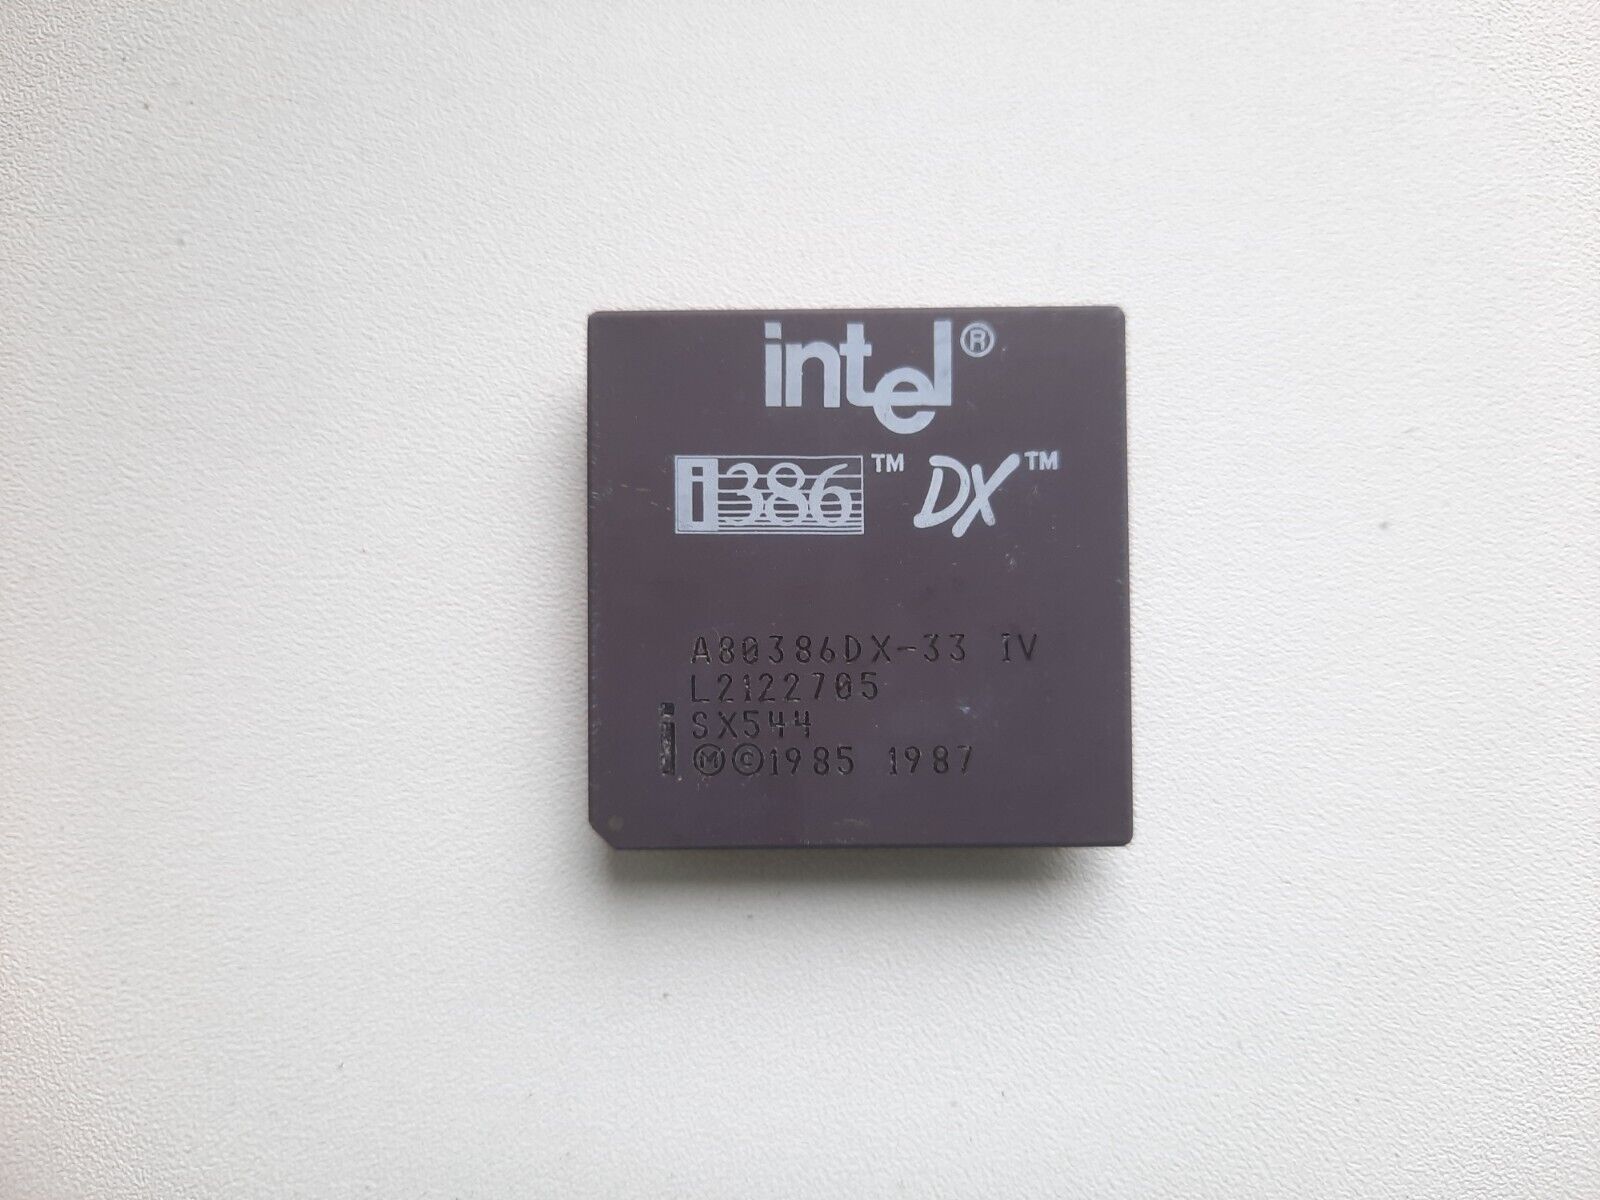 386DX Intel A80386DX-33 IV SX544 386 33Mhz Vintage CPU GOLD